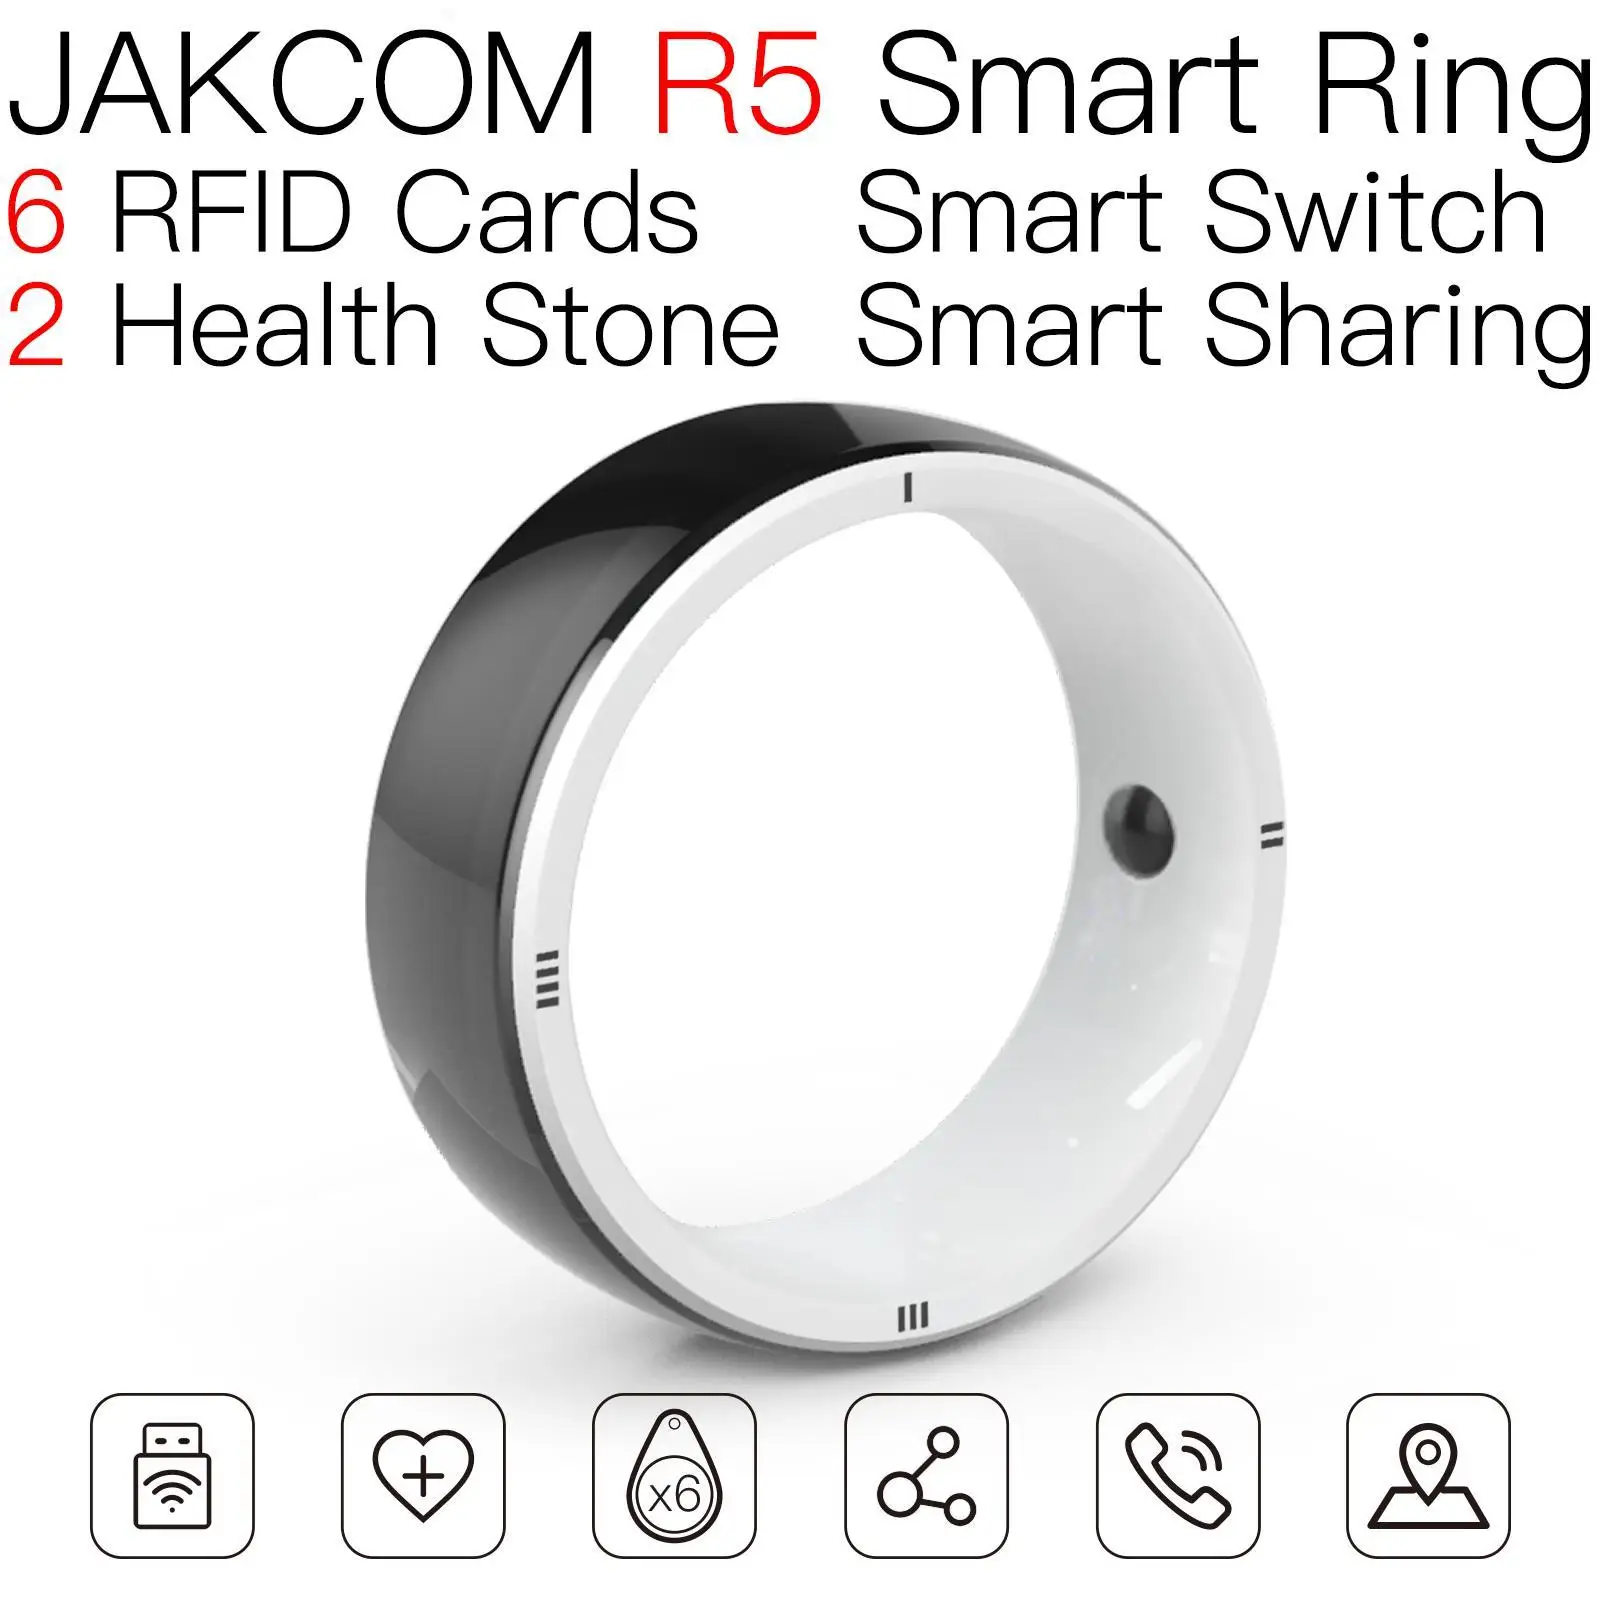 

JAKCOM R5 Smart Ring For men women uhf rfid tag 4k rewritable s70 reasearch chemicals alien secret sticker card